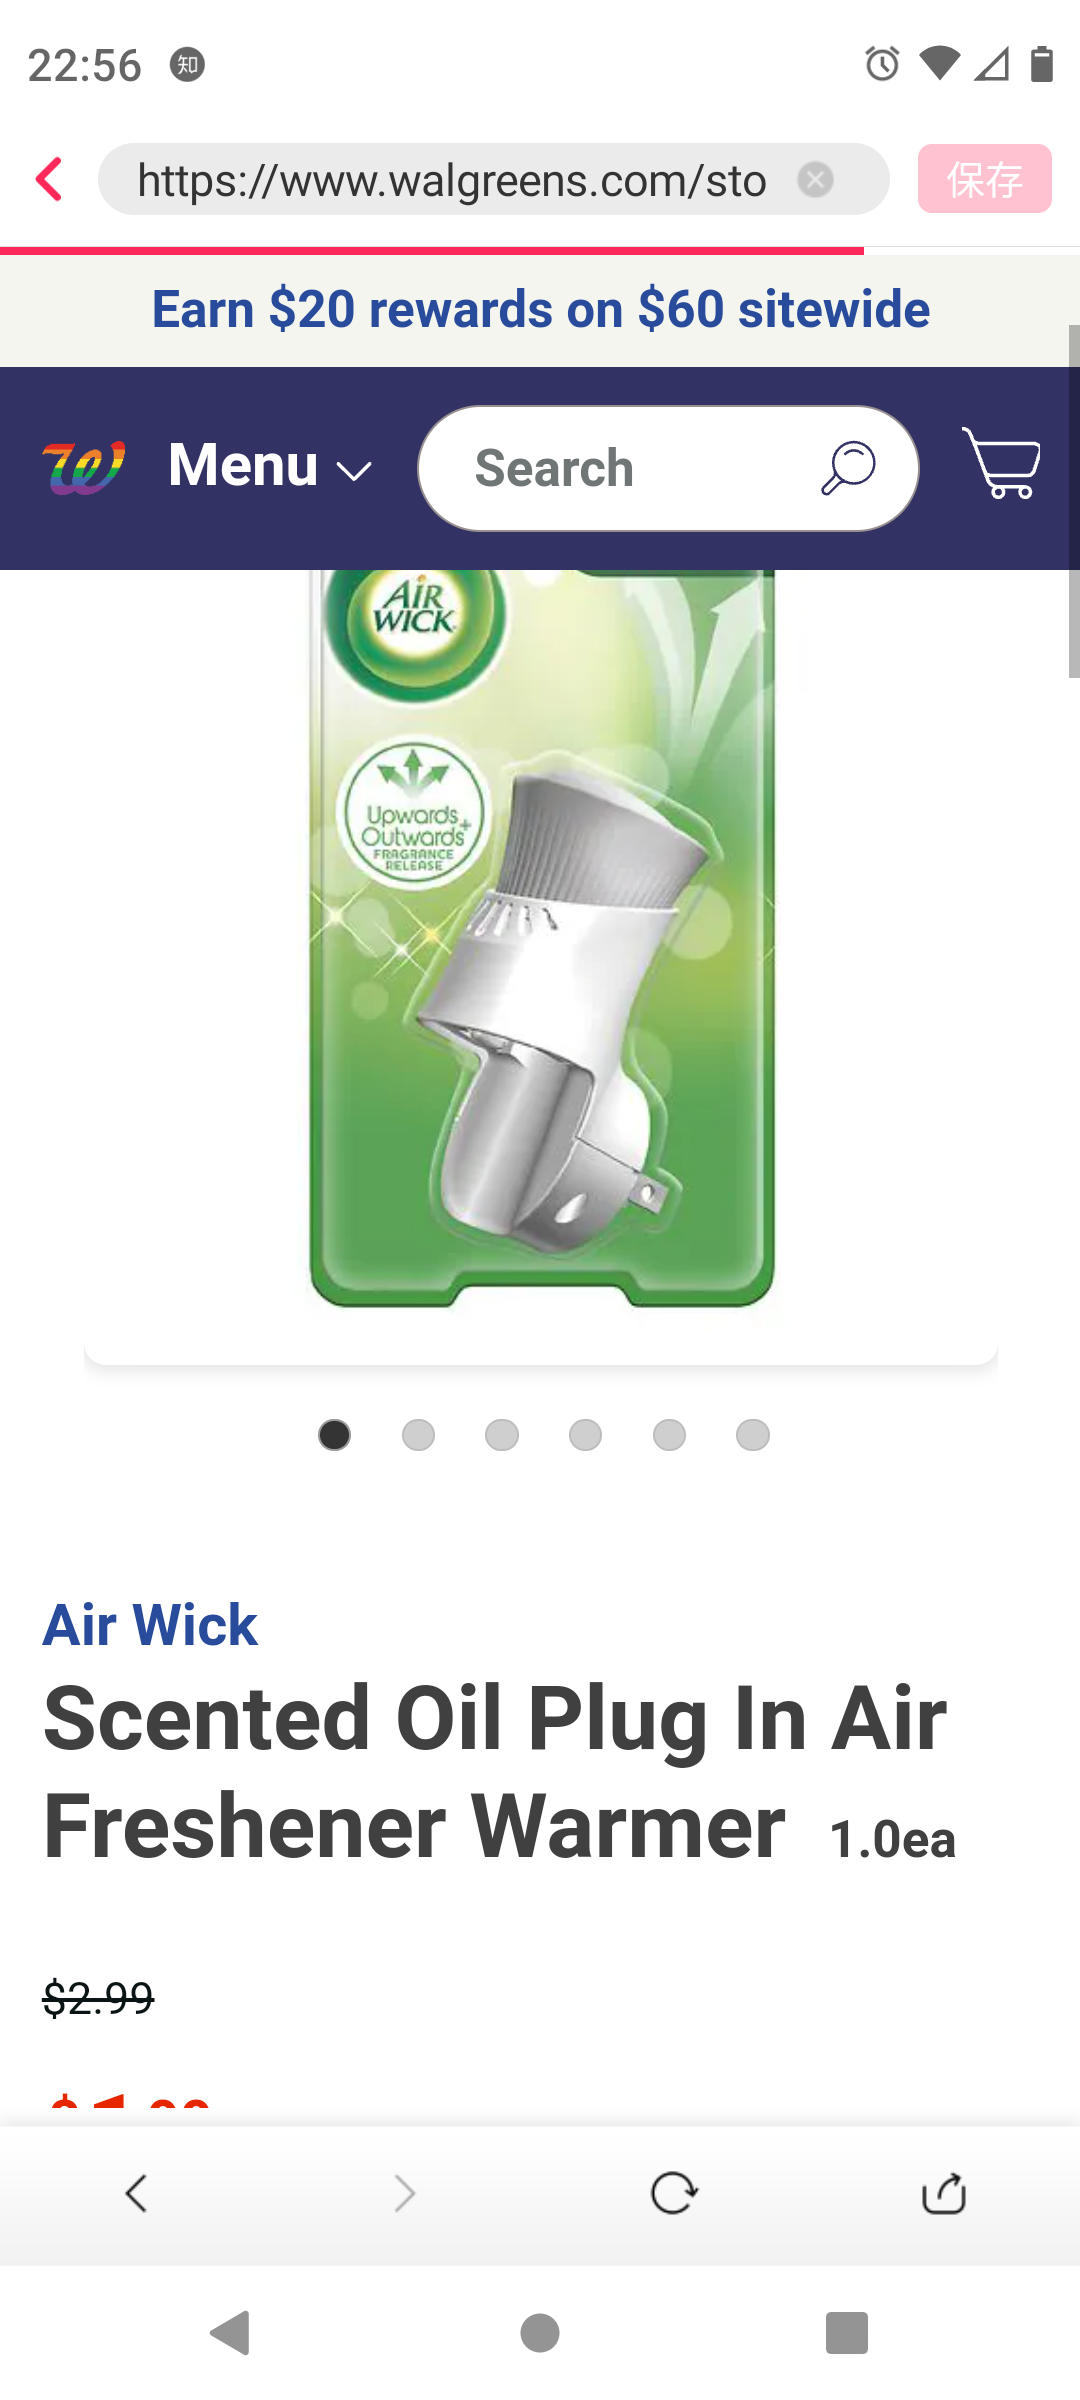 Air Wick Scented Oil Plug In Air Freshener Warmer White | Walgreens